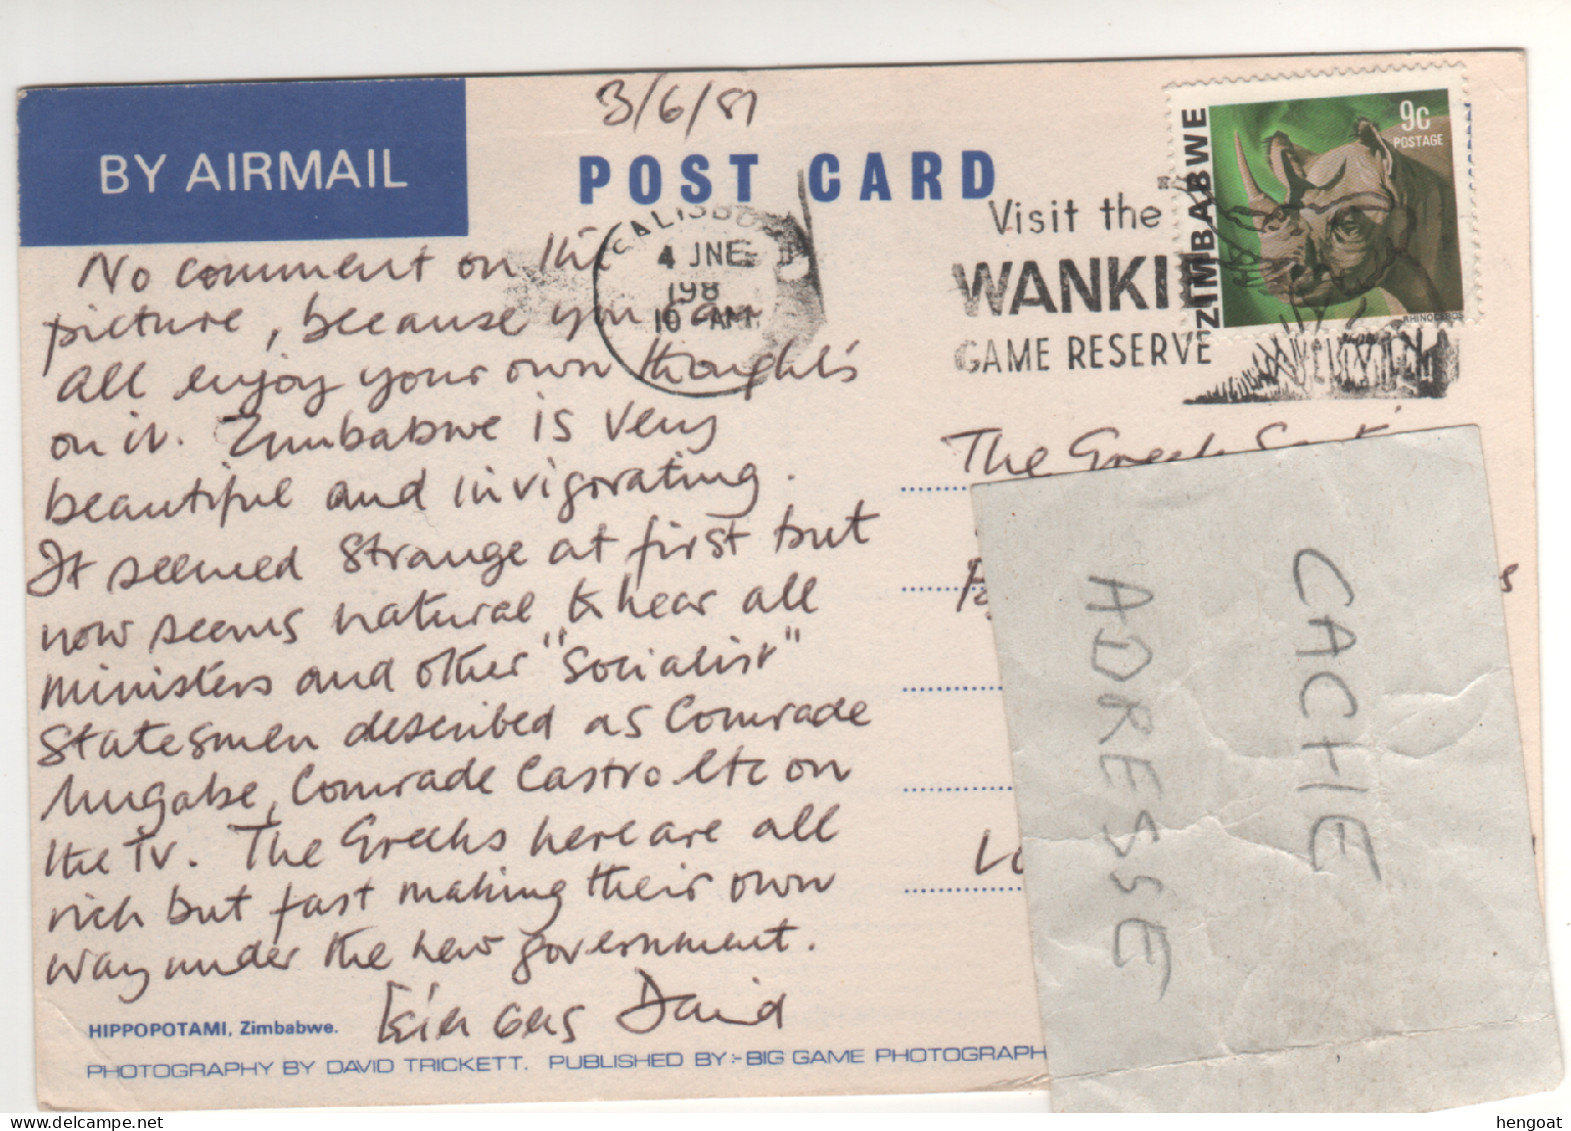 Timbre , Stamp " Animal Mammifère : Rhinocéros " Sur Cp , Carte , Postcard Du 04/06/81 ( Pelurage Coté Vue ) - Zimbabwe (1980-...)